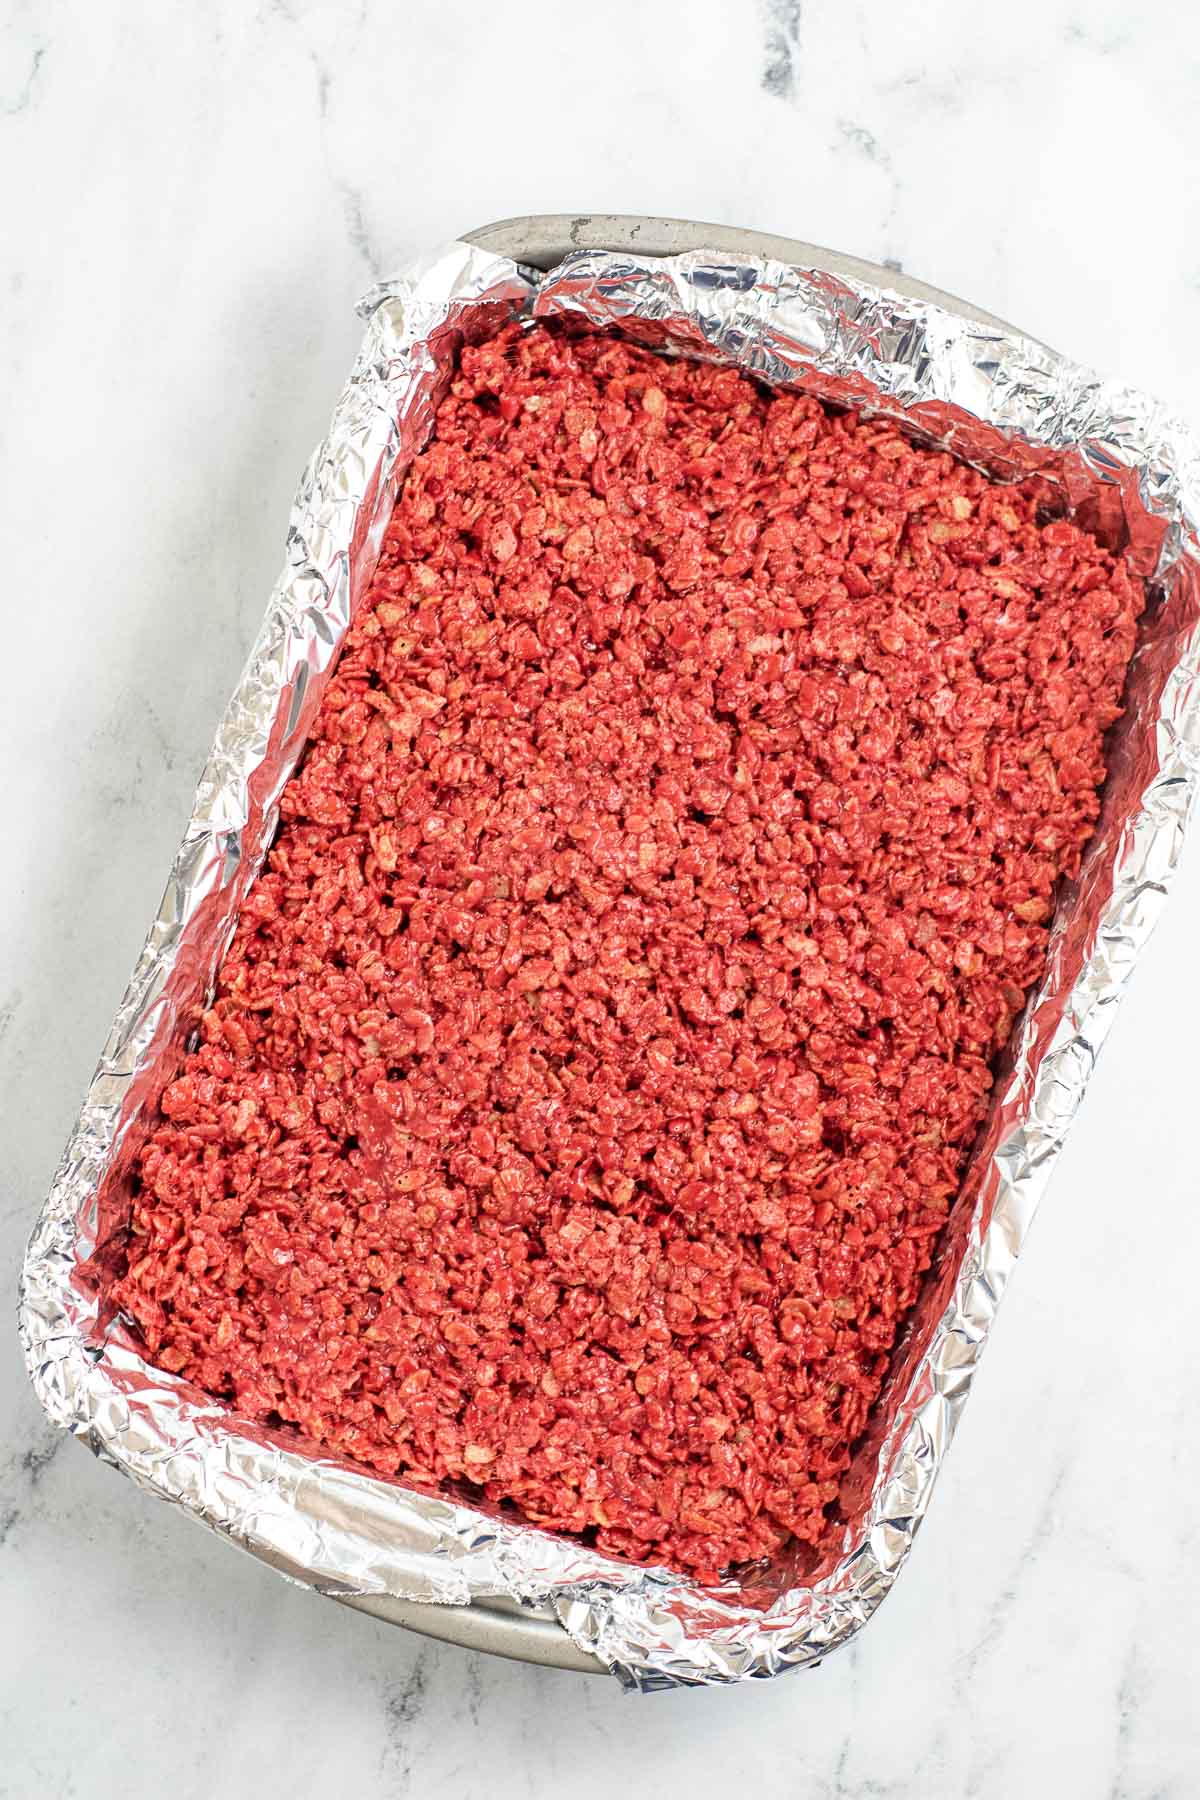 red rice krispie treat mixture pressed in a 9x13 pan